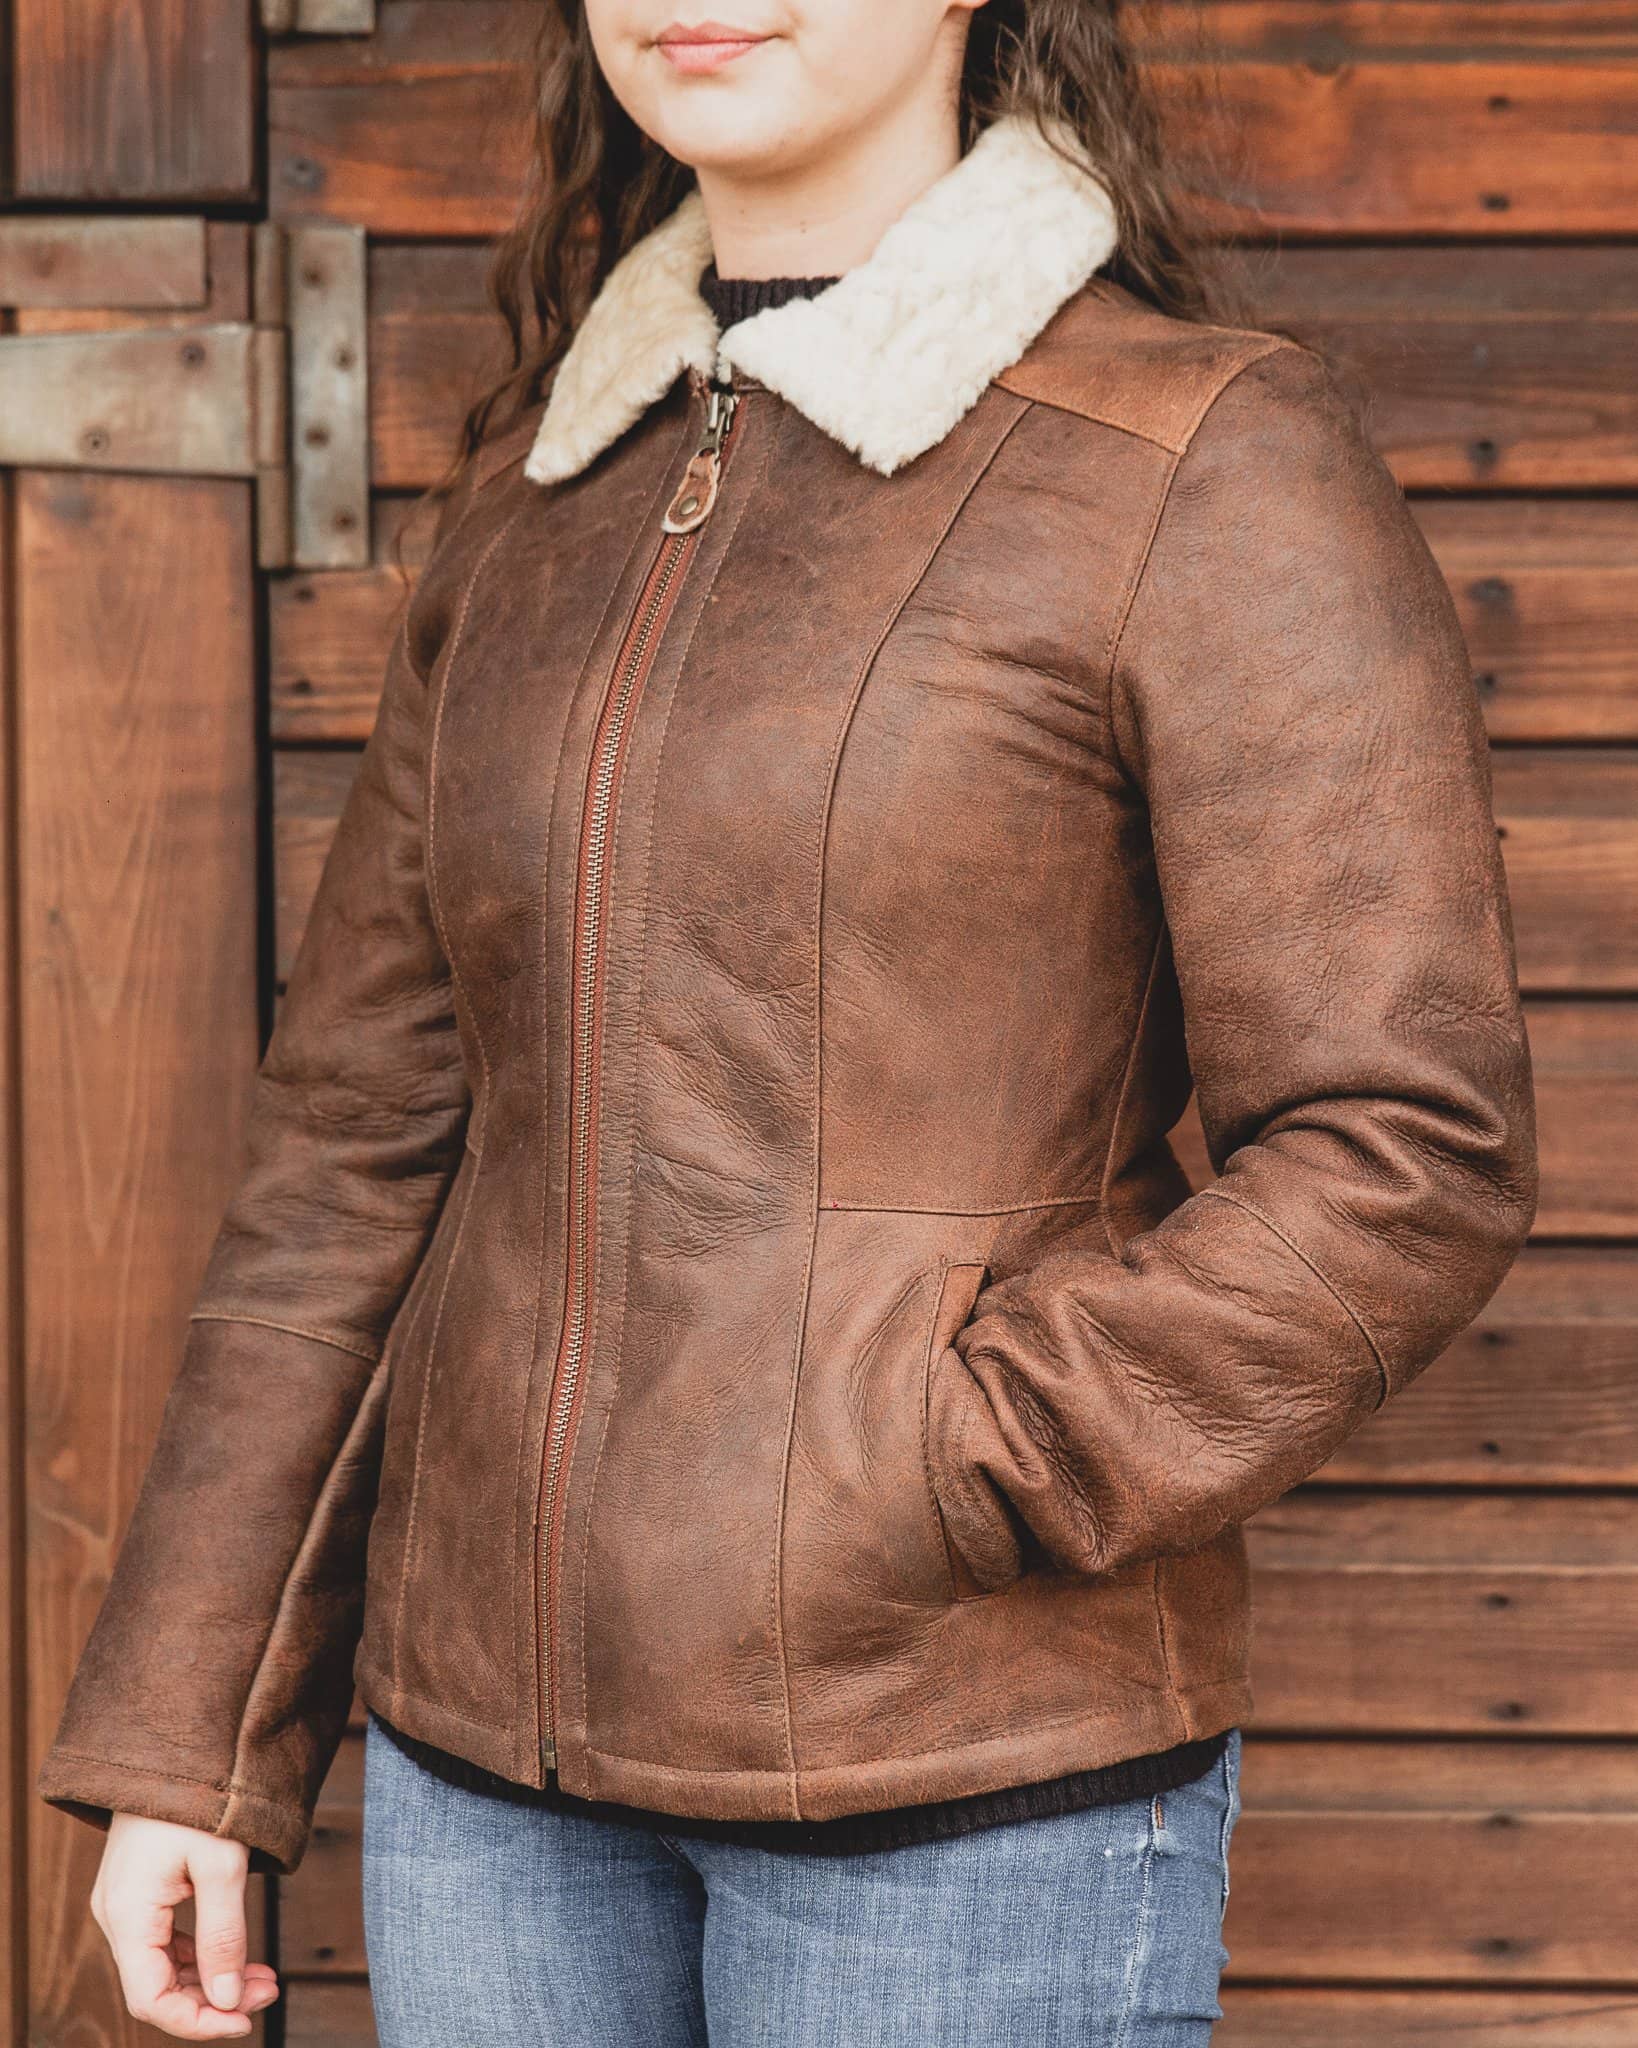 Nordvek womens sheepskin jacket 707-100 tan on model front zipped up